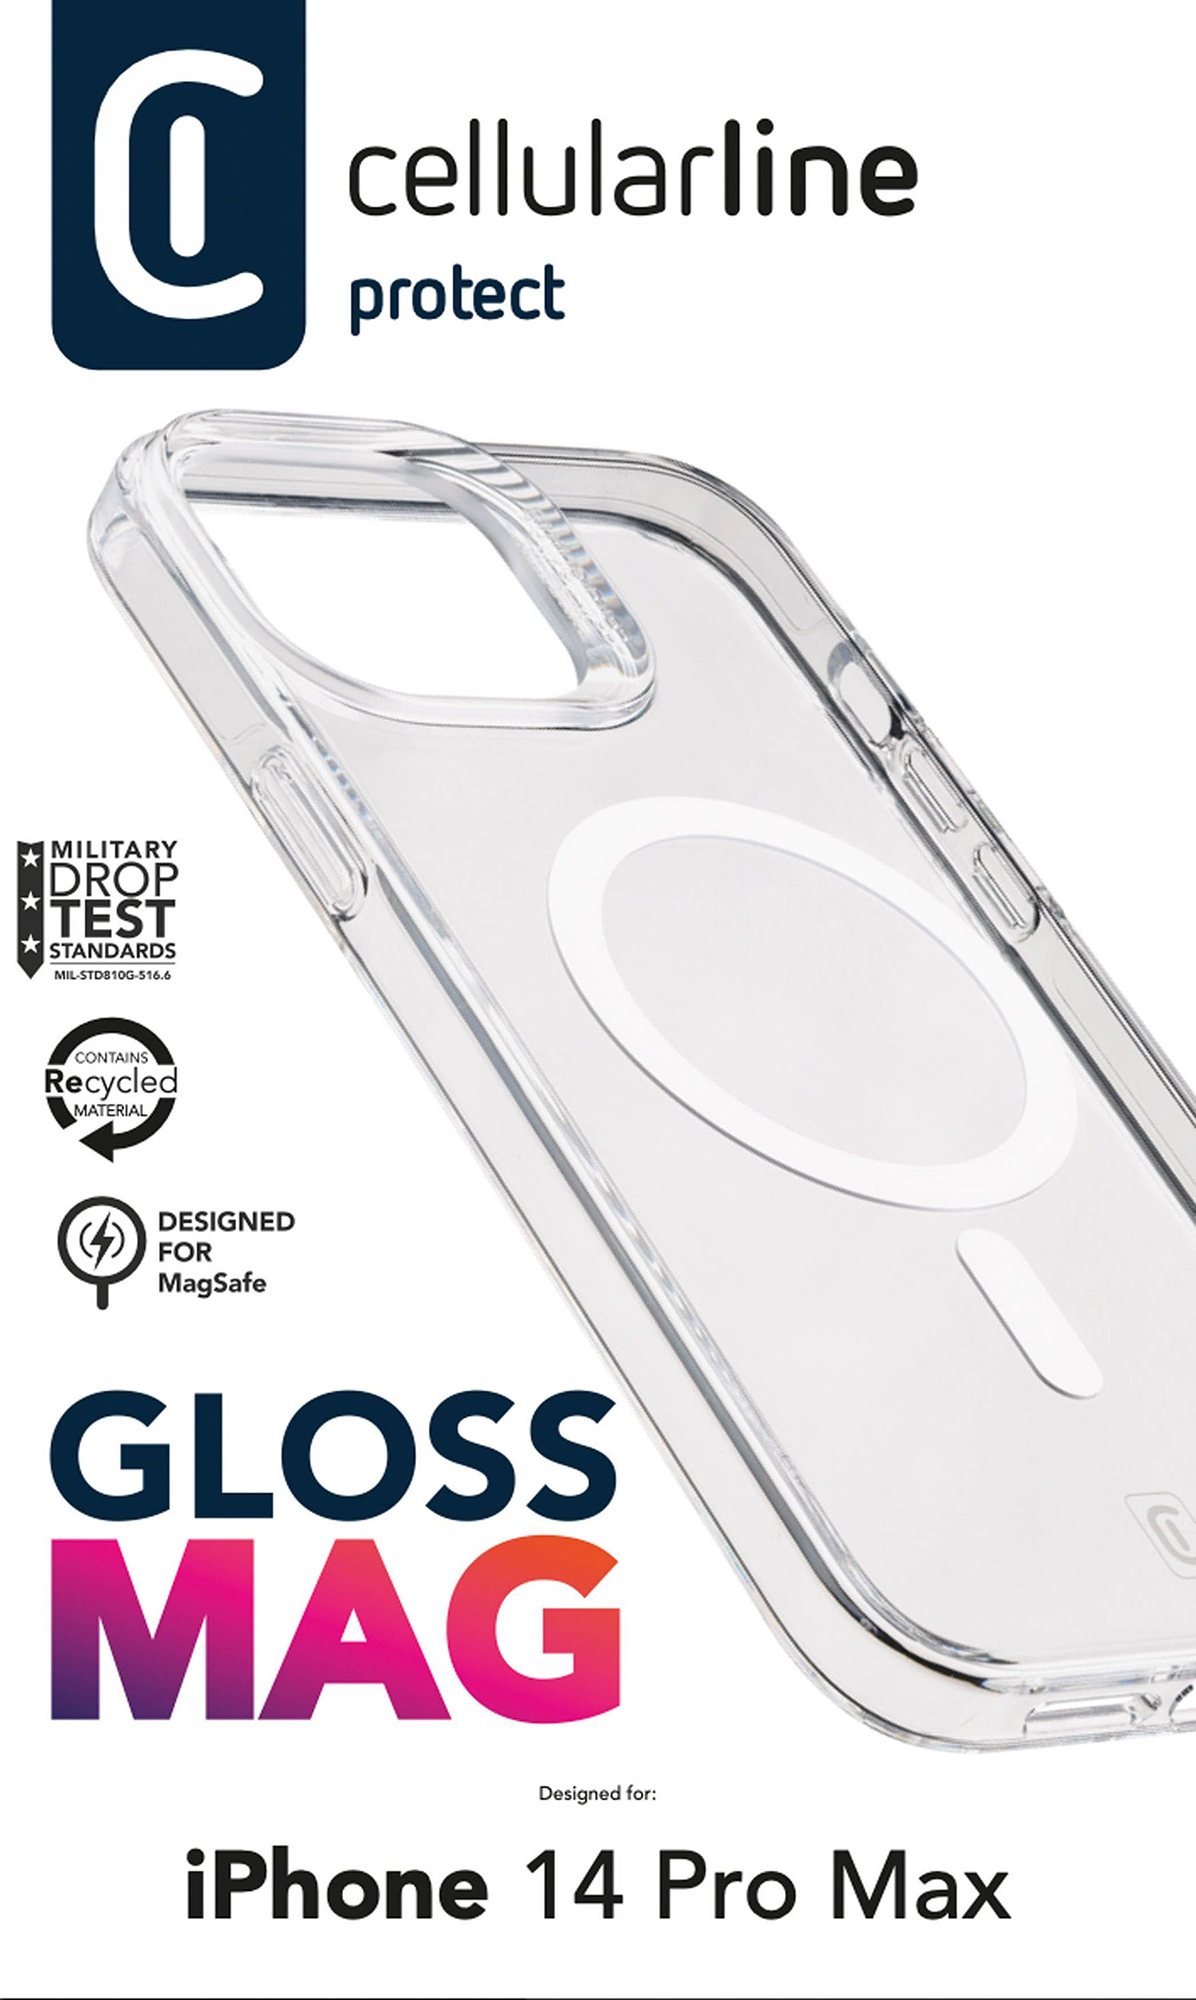 Gloss Mag - iPhone 14 Pro Max